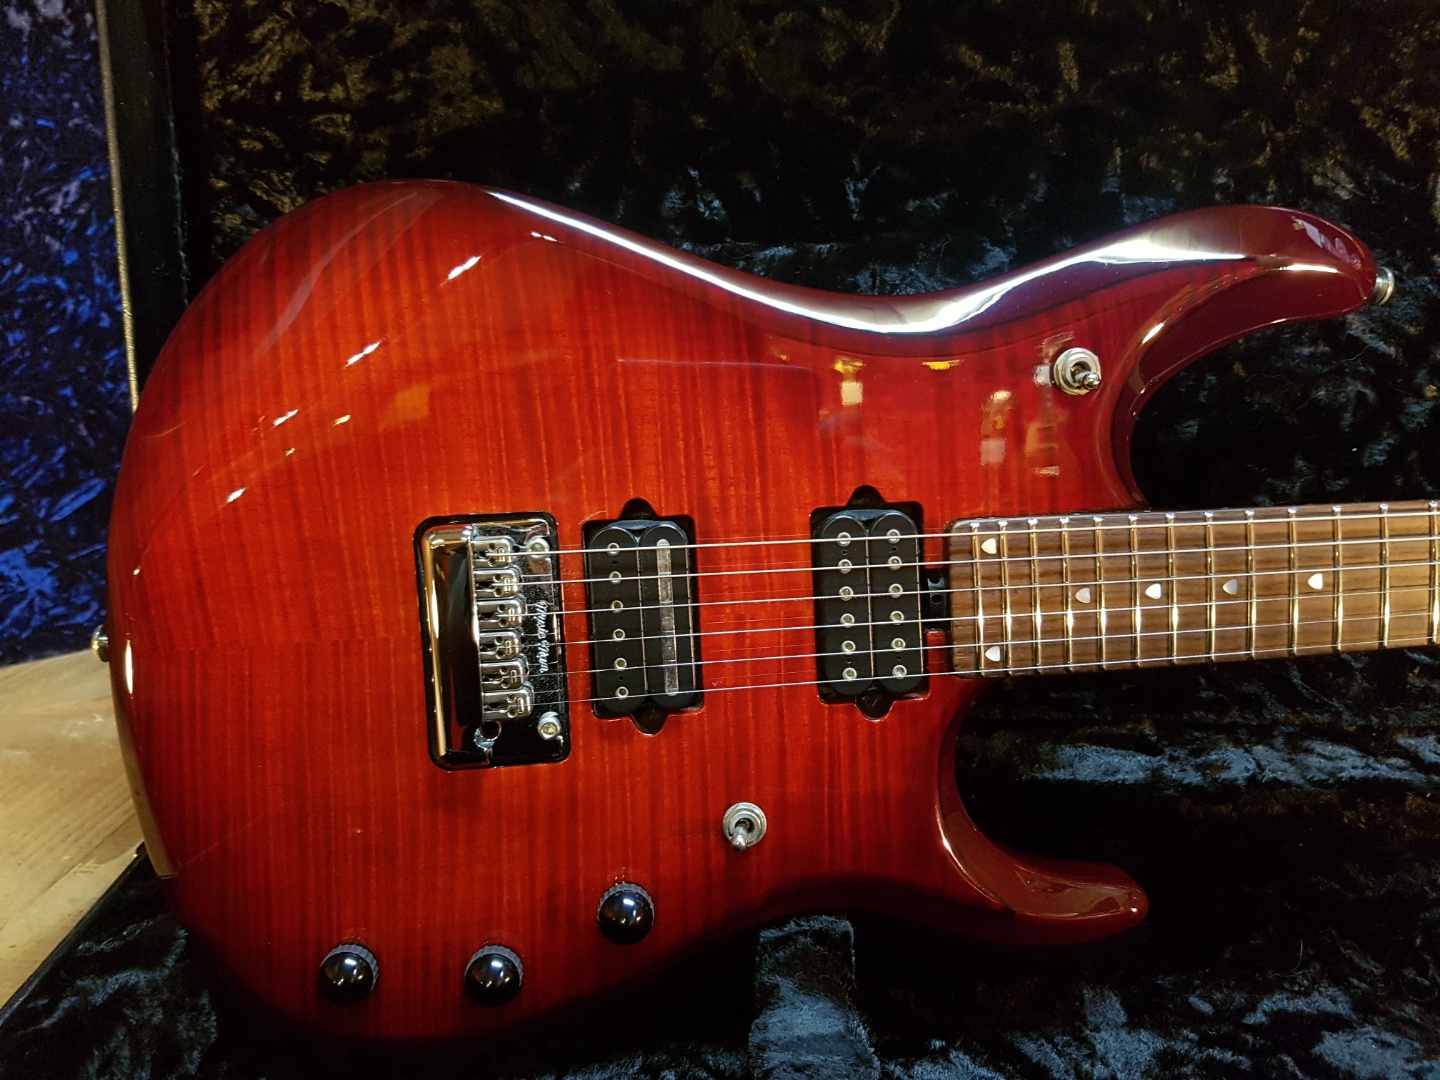 Music Man John Petrucci BFR 6_Ruby Flame